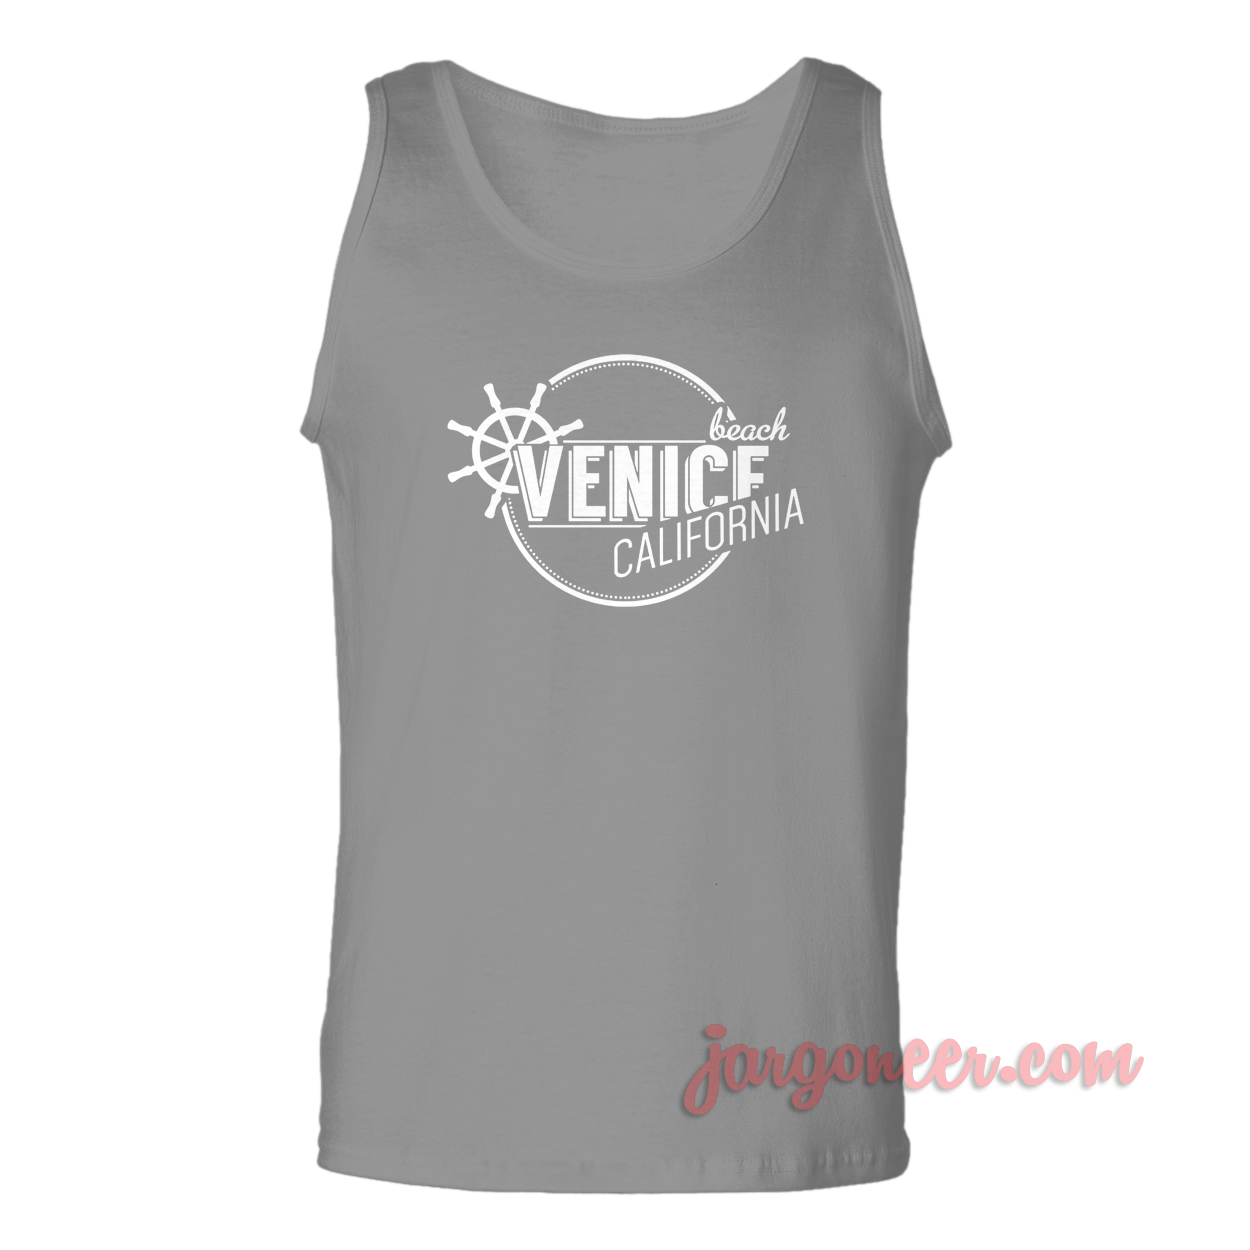 Venice Beach California - Shop Unique Graphic Cool Shirt Designs